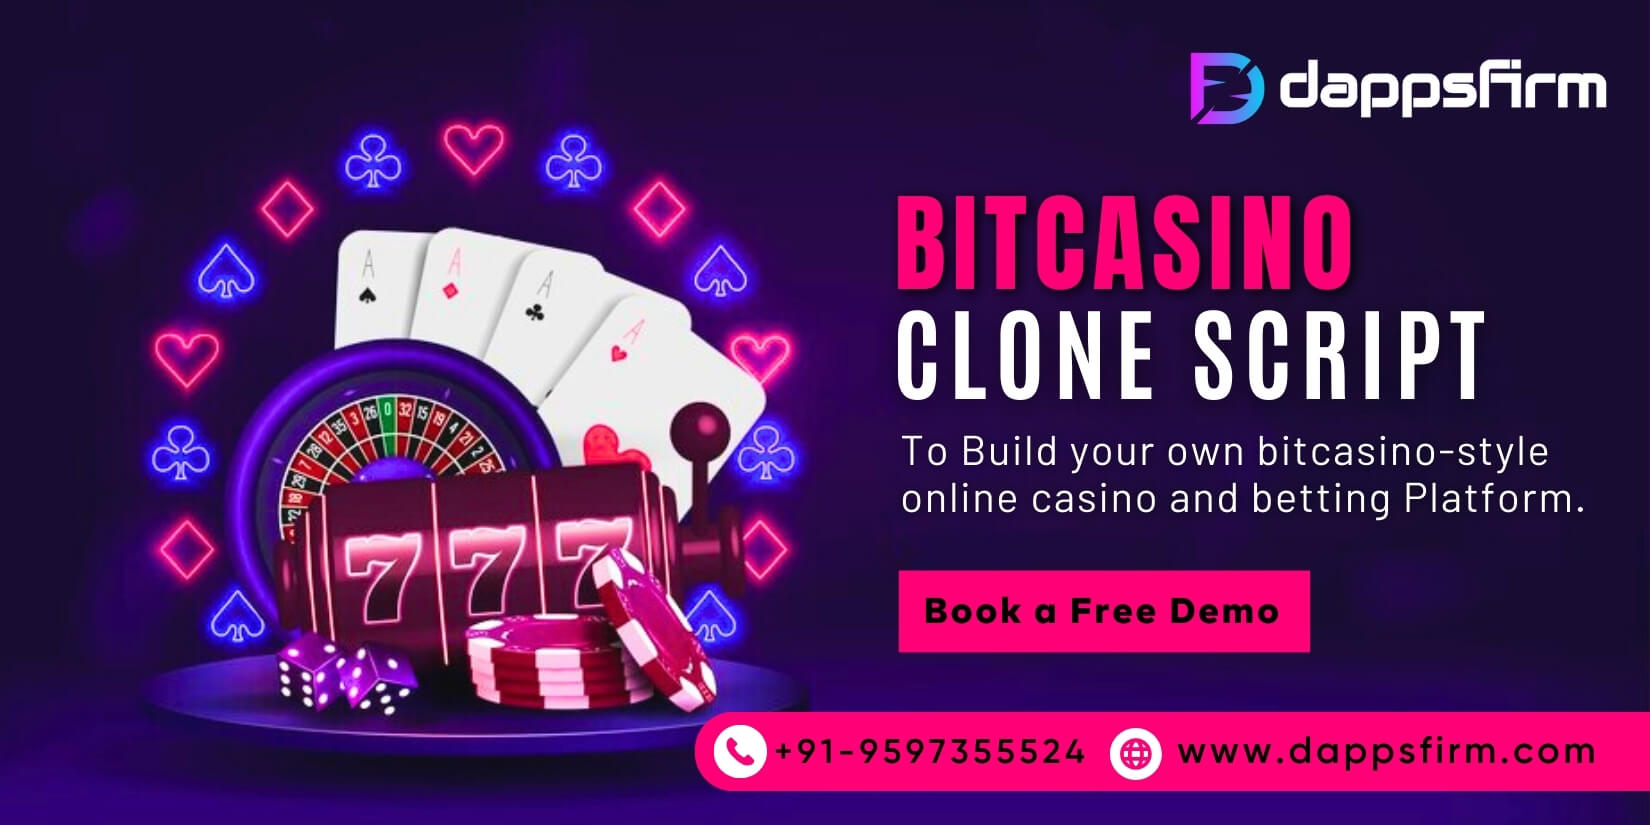 Bitcasino Clone Script To Kickstart Your Online Gambling Platform